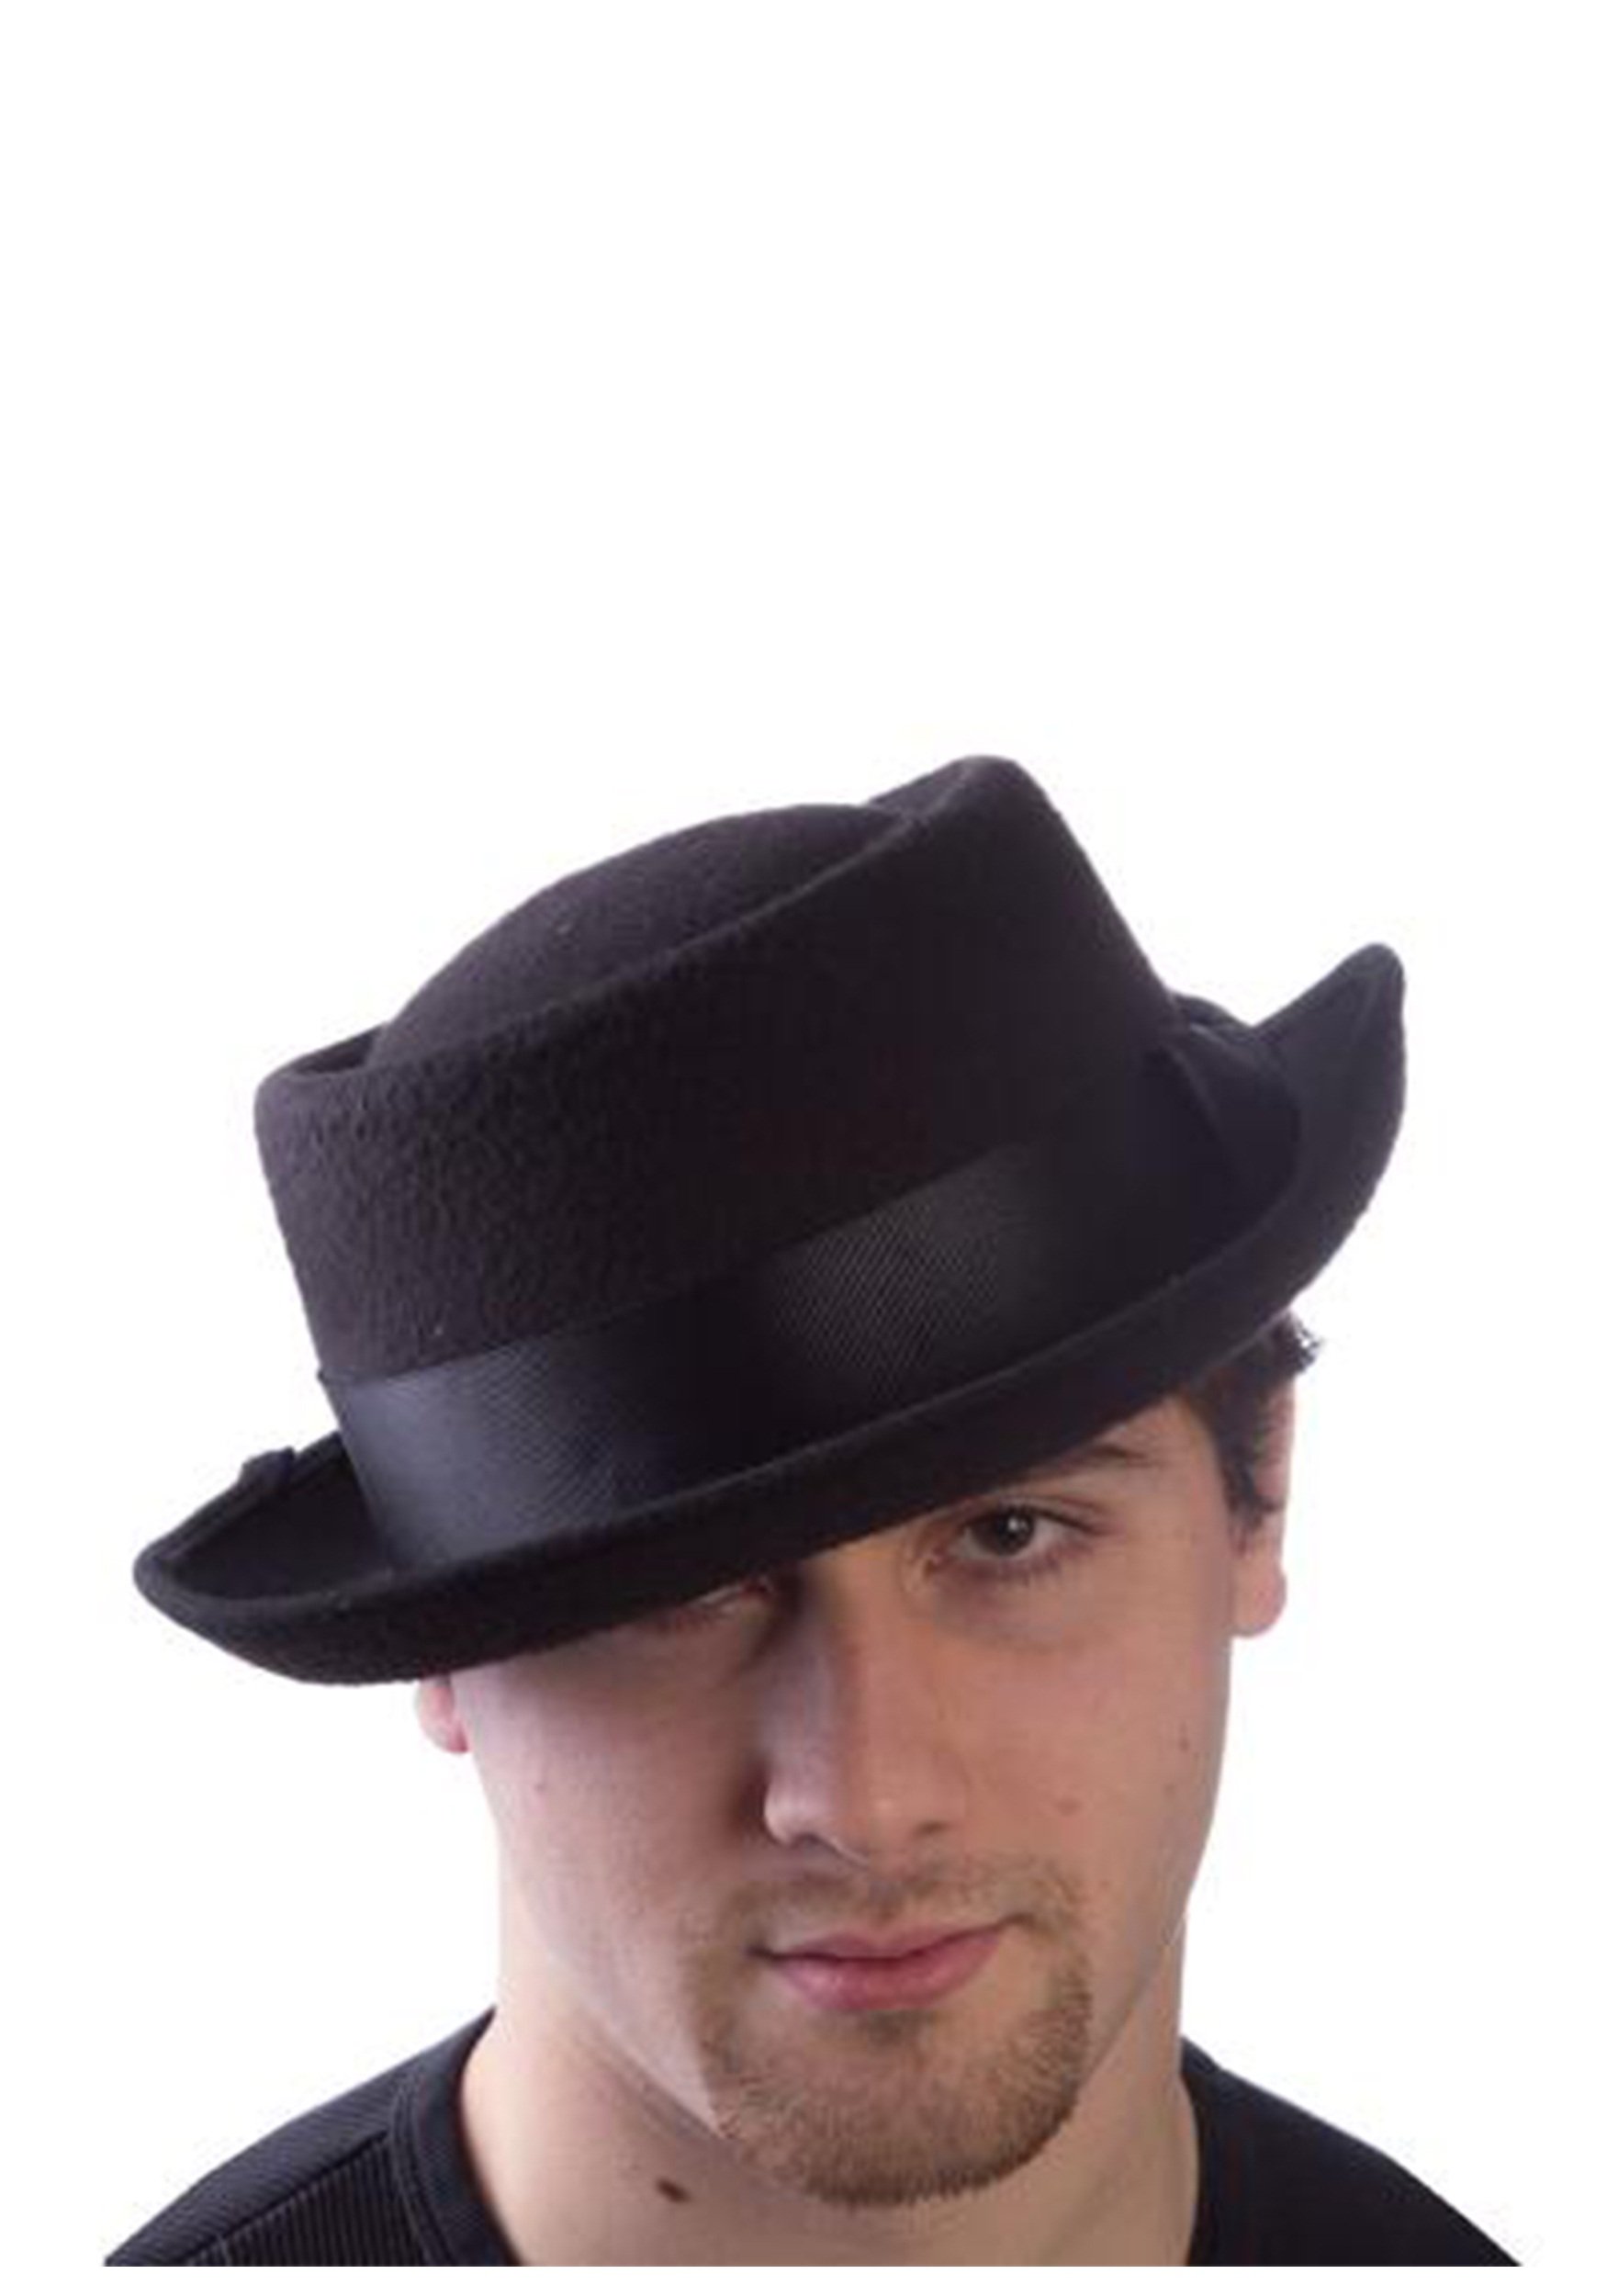 Шляпы мужские спб. Шляпа порк Пай. Pork pie шляпа мужская. Мужская черная шляпа порк-Пай. Шляпа мужская Amundson.